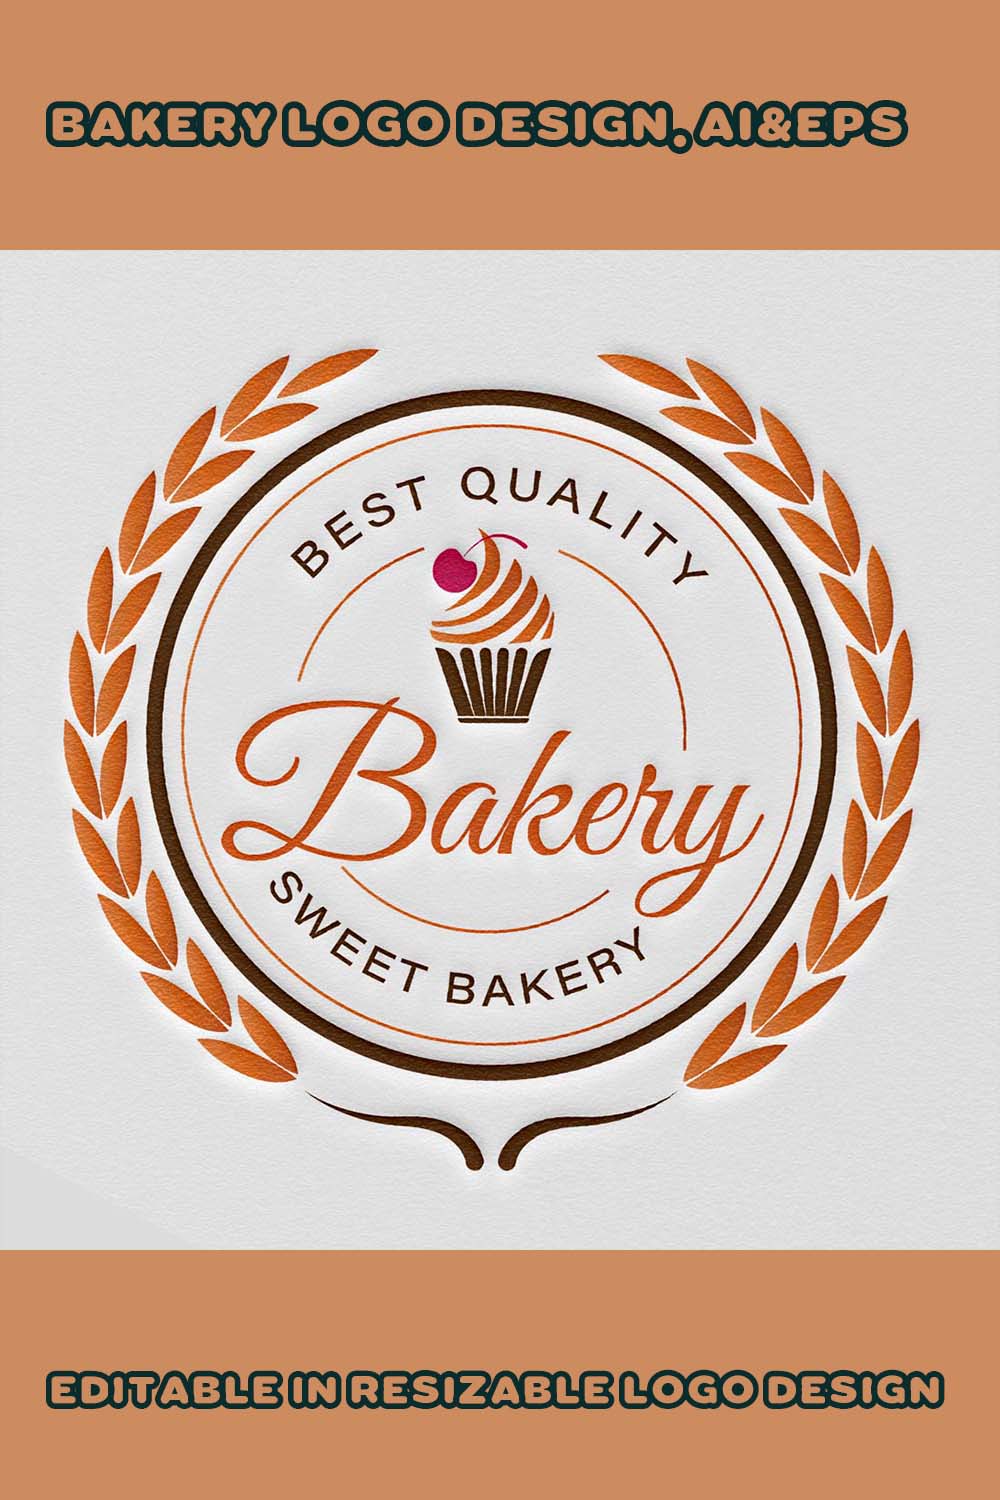 Bakery logo design creative Royalty Free Vector Image